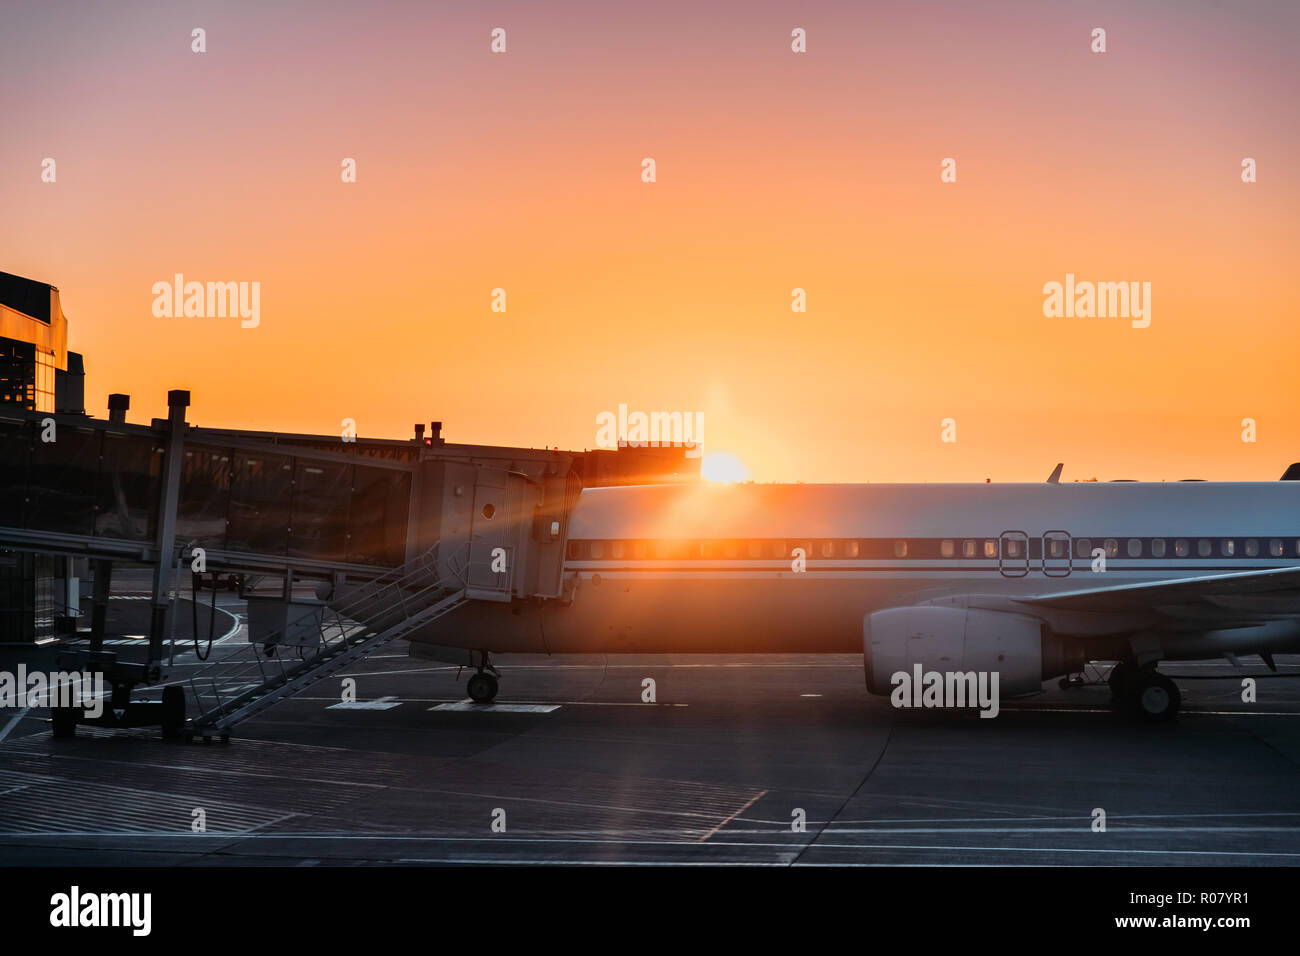 Flugzeuge Flugzeug Boarding Passagiere Flughafen im sonnigen Sonnenuntergang Sonnenaufgang. Stockfoto